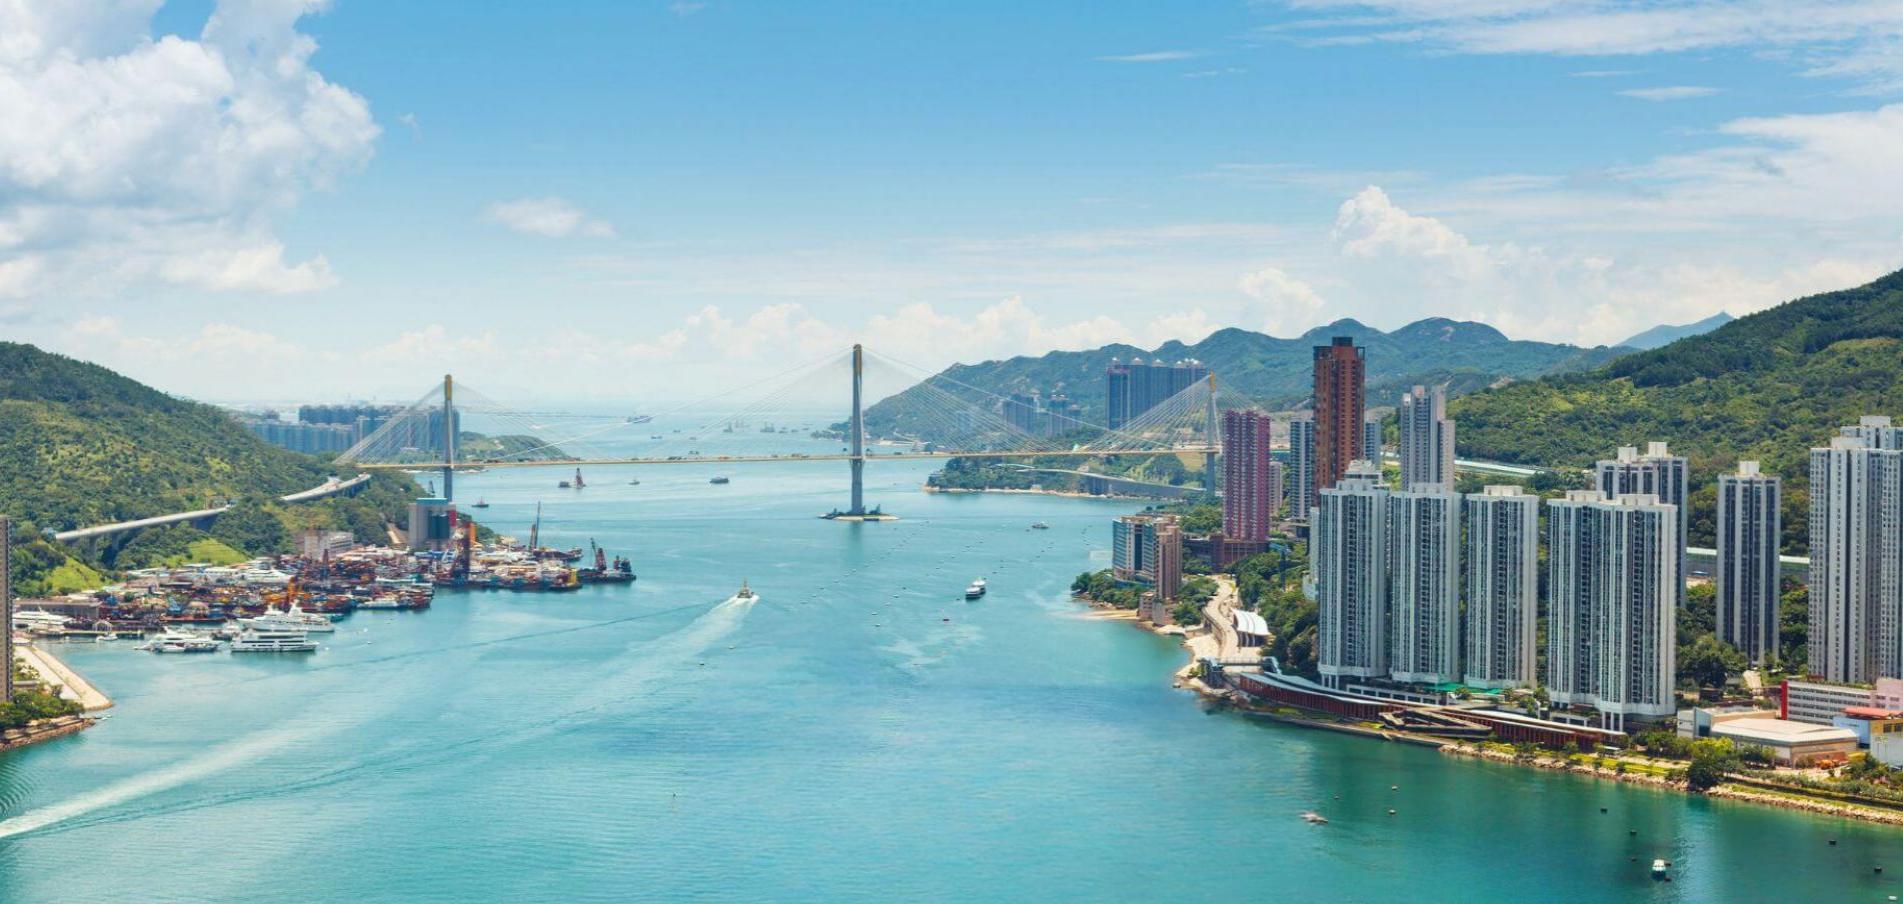 Location de yacht de luxe Hong Kong